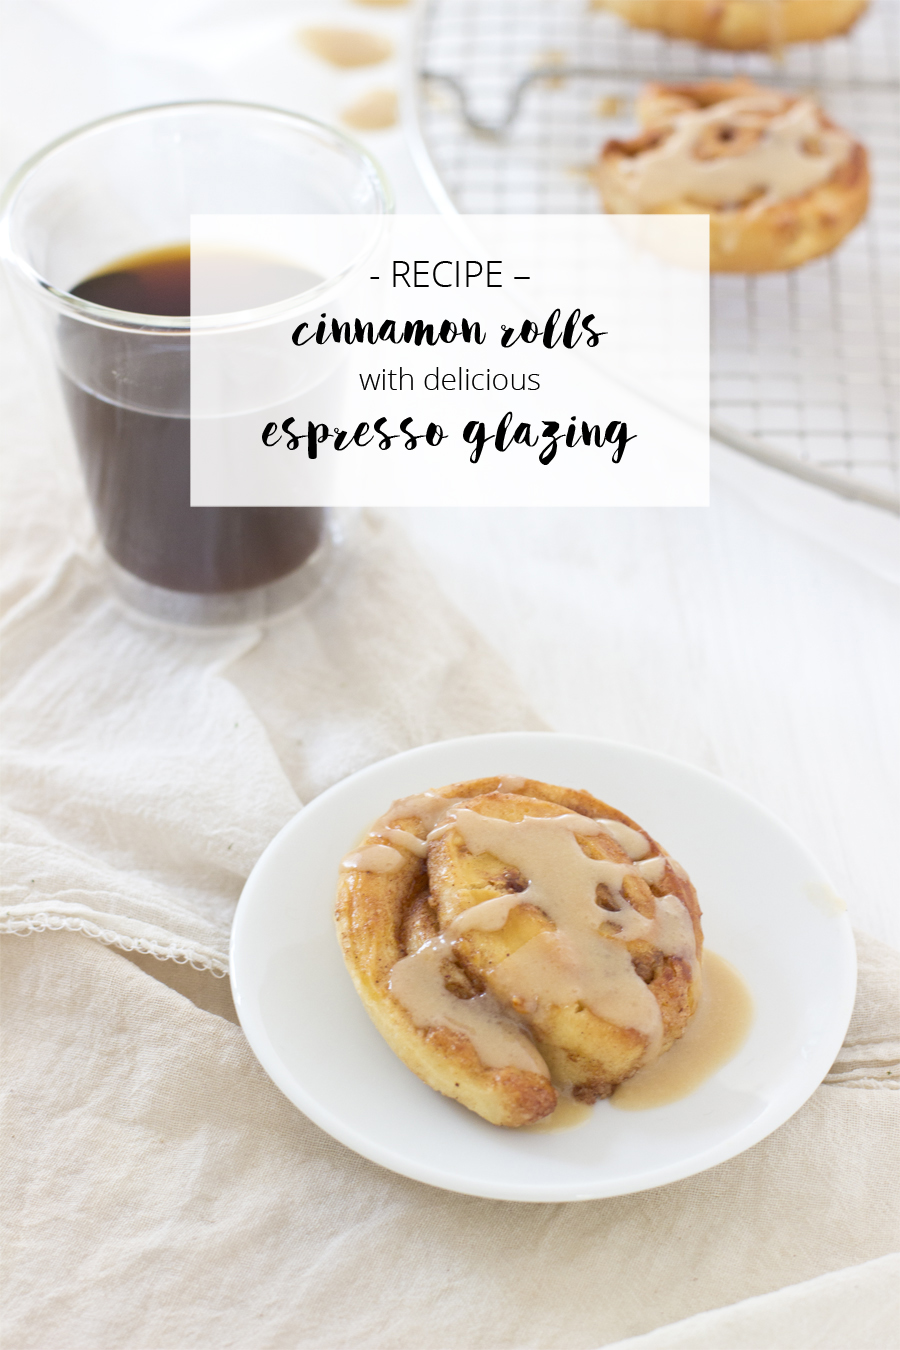 Cinnamon rolls with Espresso glazing recipe | LOOK WHAT I MADE ...